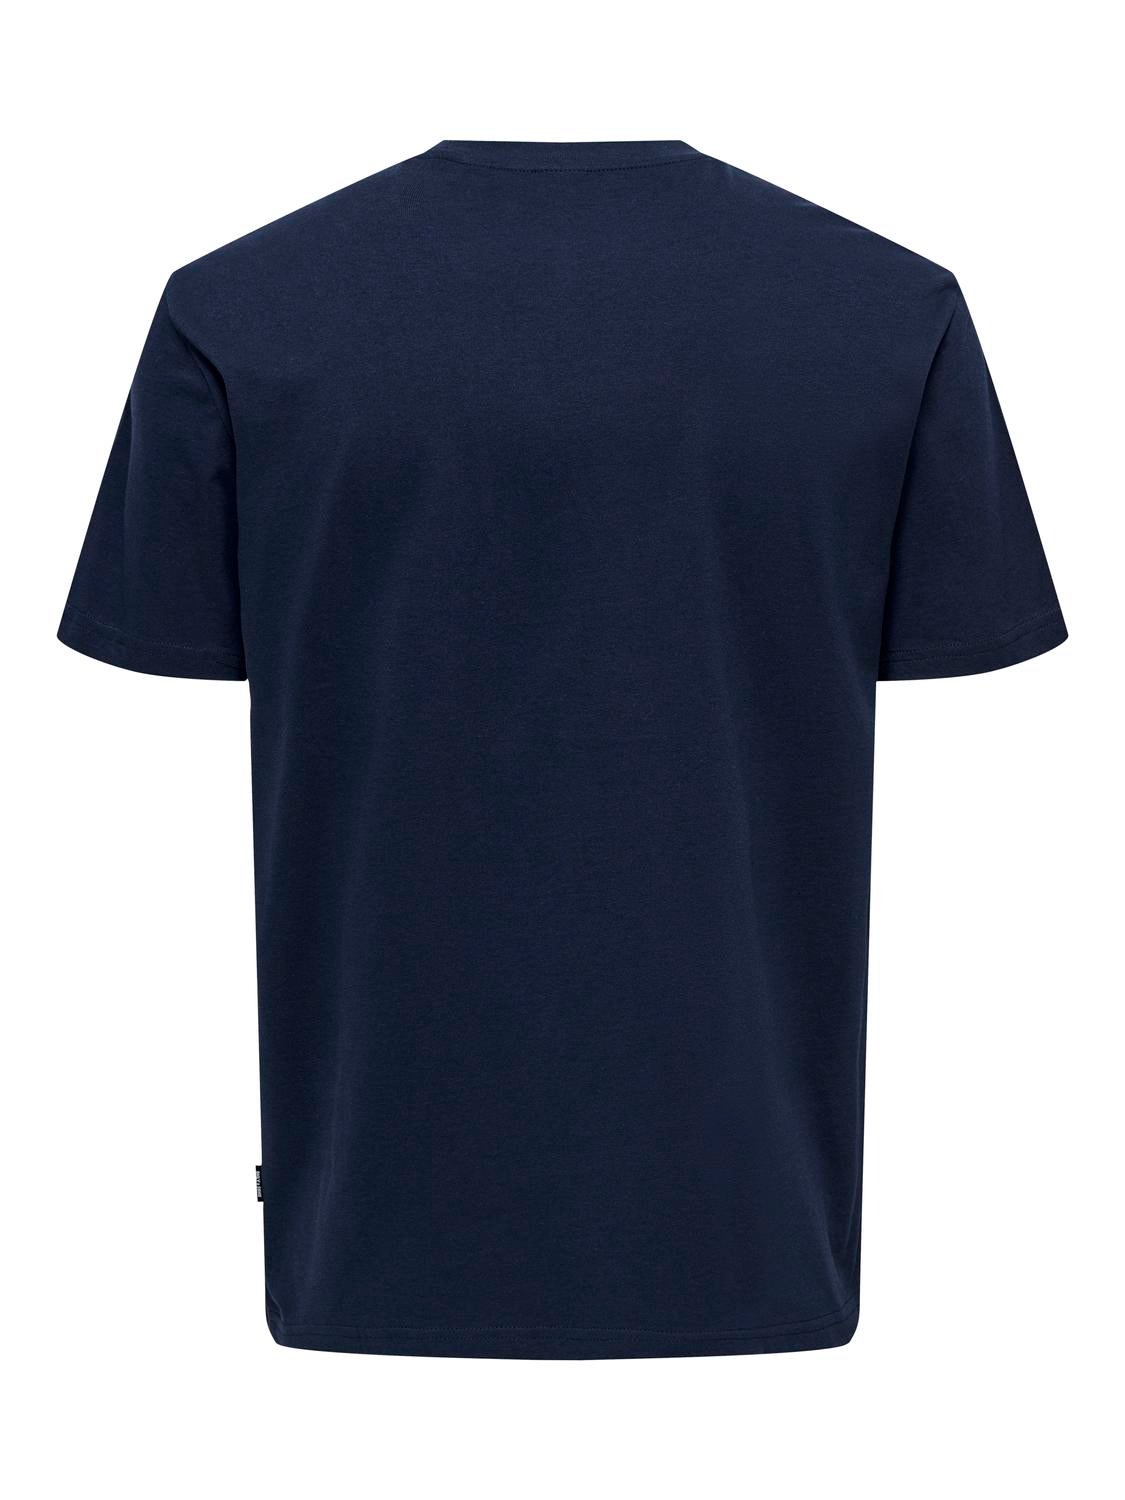 ONLY & SONS Regular Fit Round Neck T-Shirt -Navy Blazer - 22028688